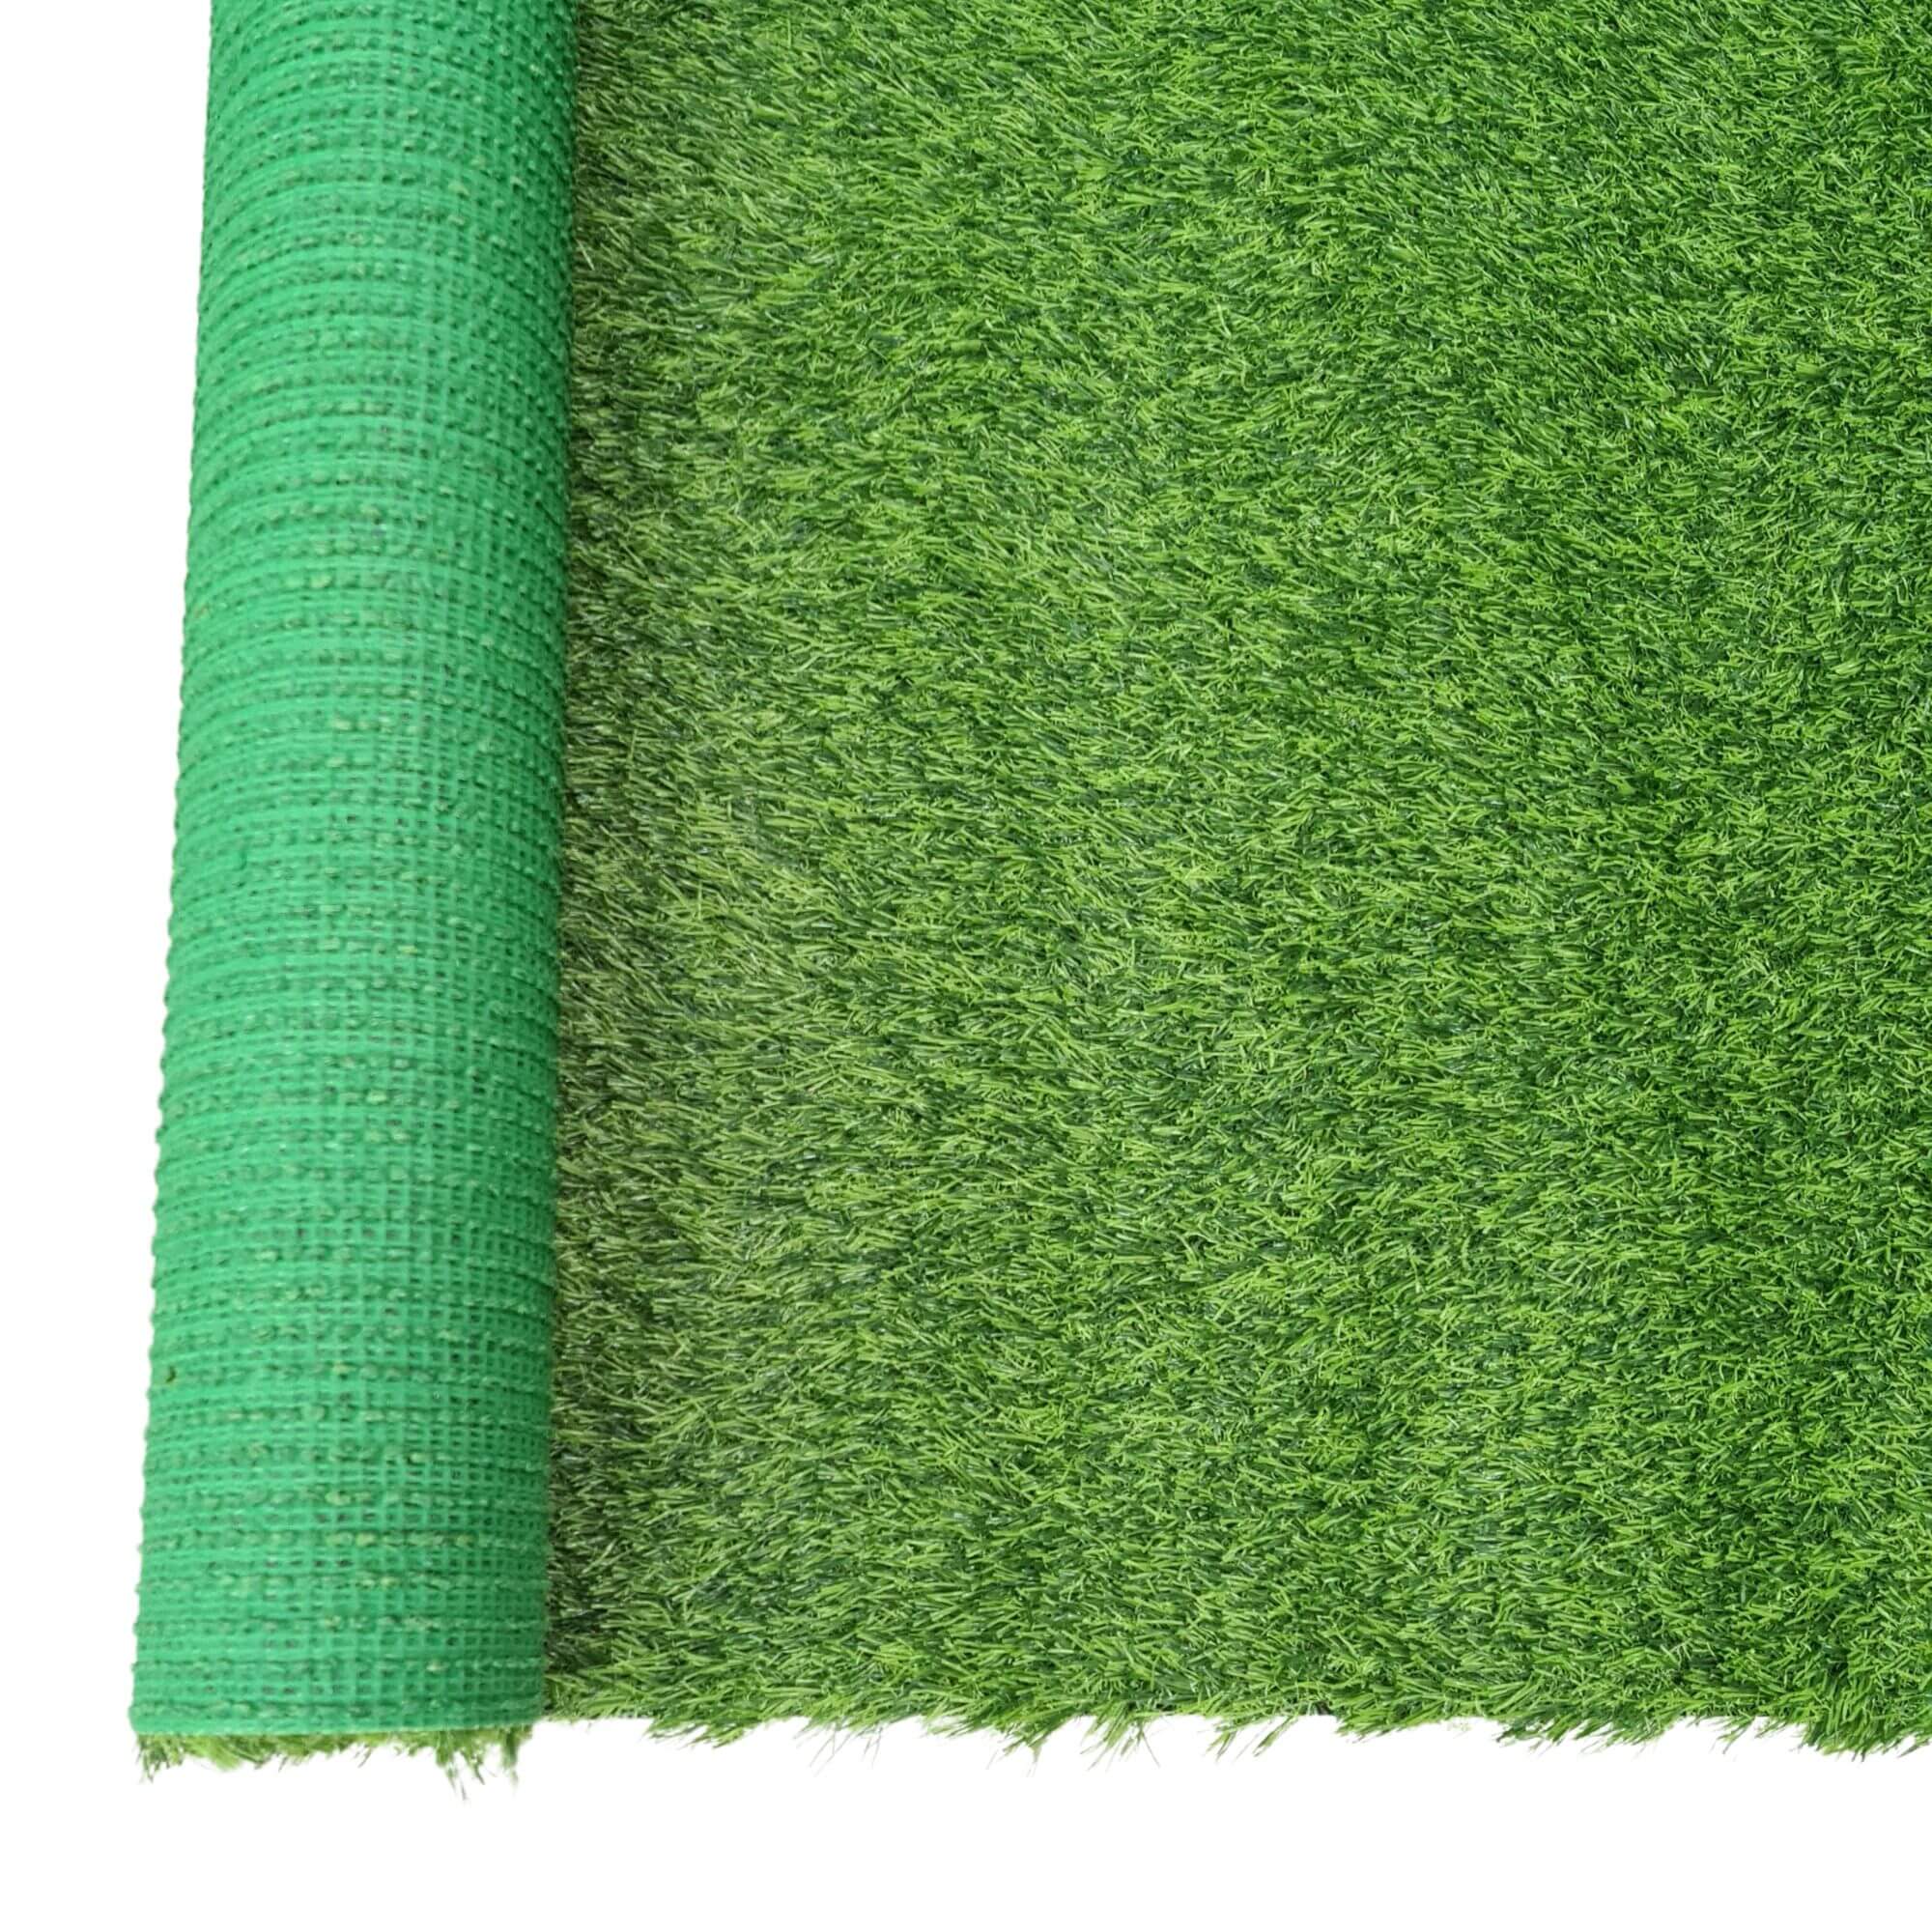 Artificial Grass Roll (Landscape Series) 300cm x 100cm Green Backing Roll